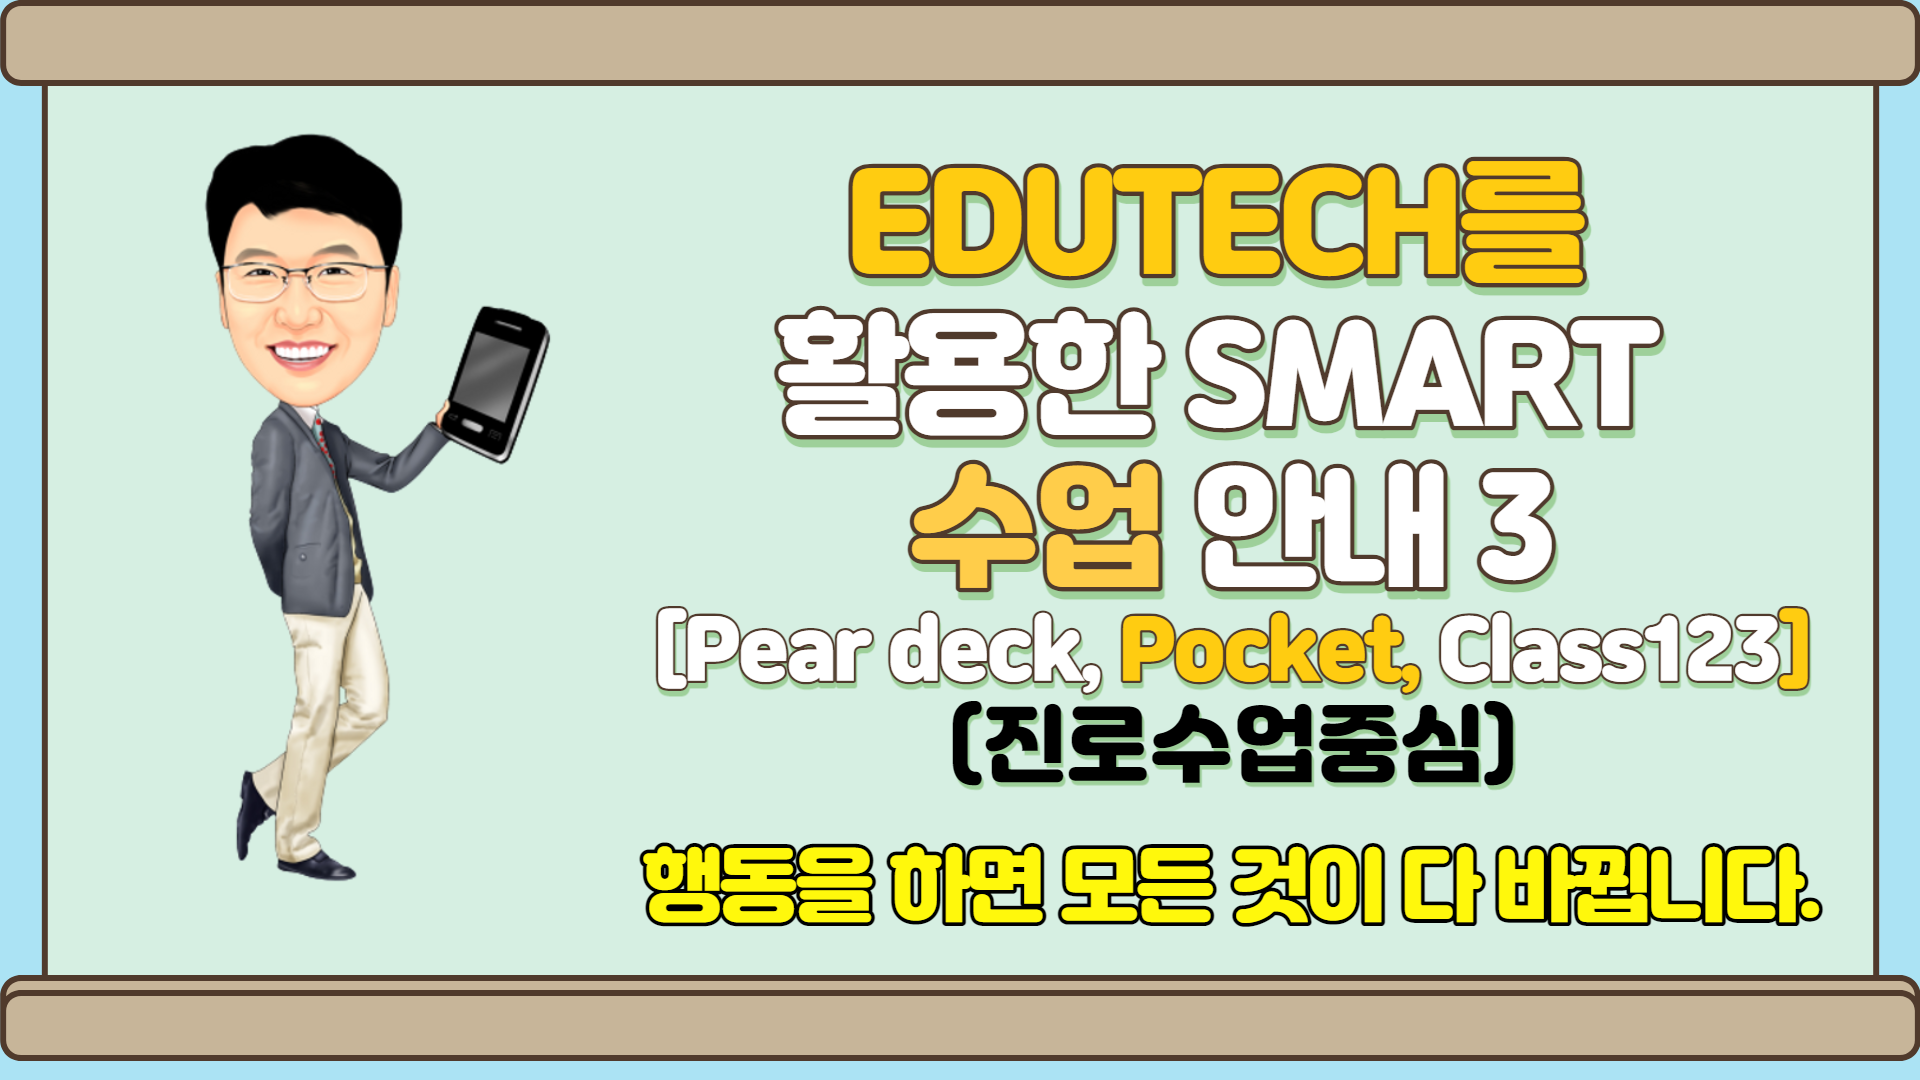 EDUTECH를 활용한 smart 수업 방법 안내 3(진로수업을 중심으로)(Pocket,classcard,peardeck)